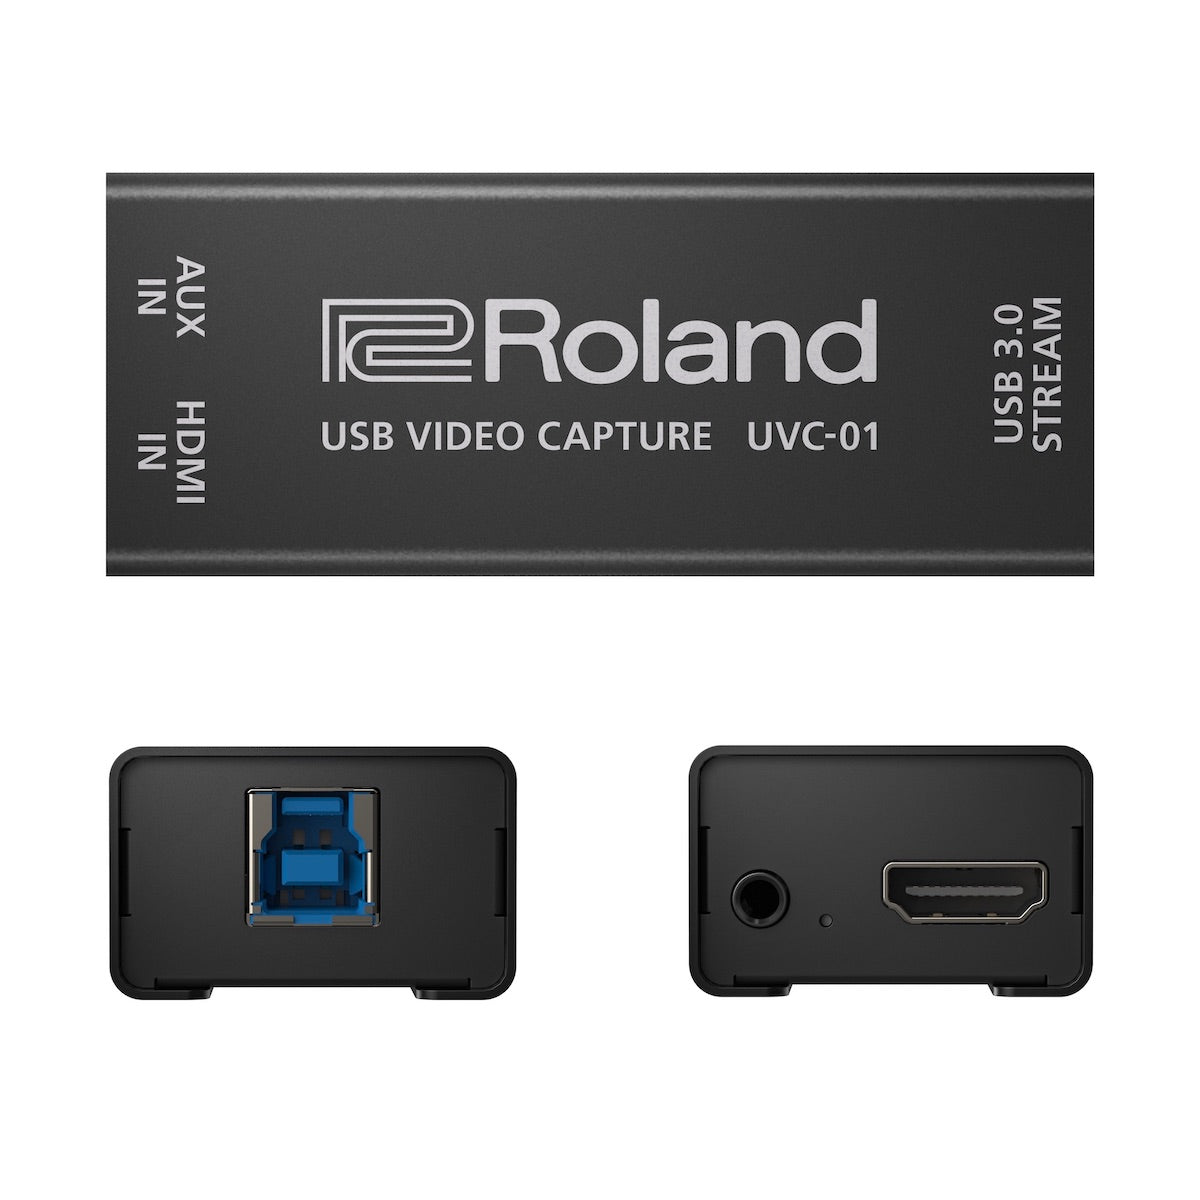 Roland UVC-01 USB Video Capture device, multiple views